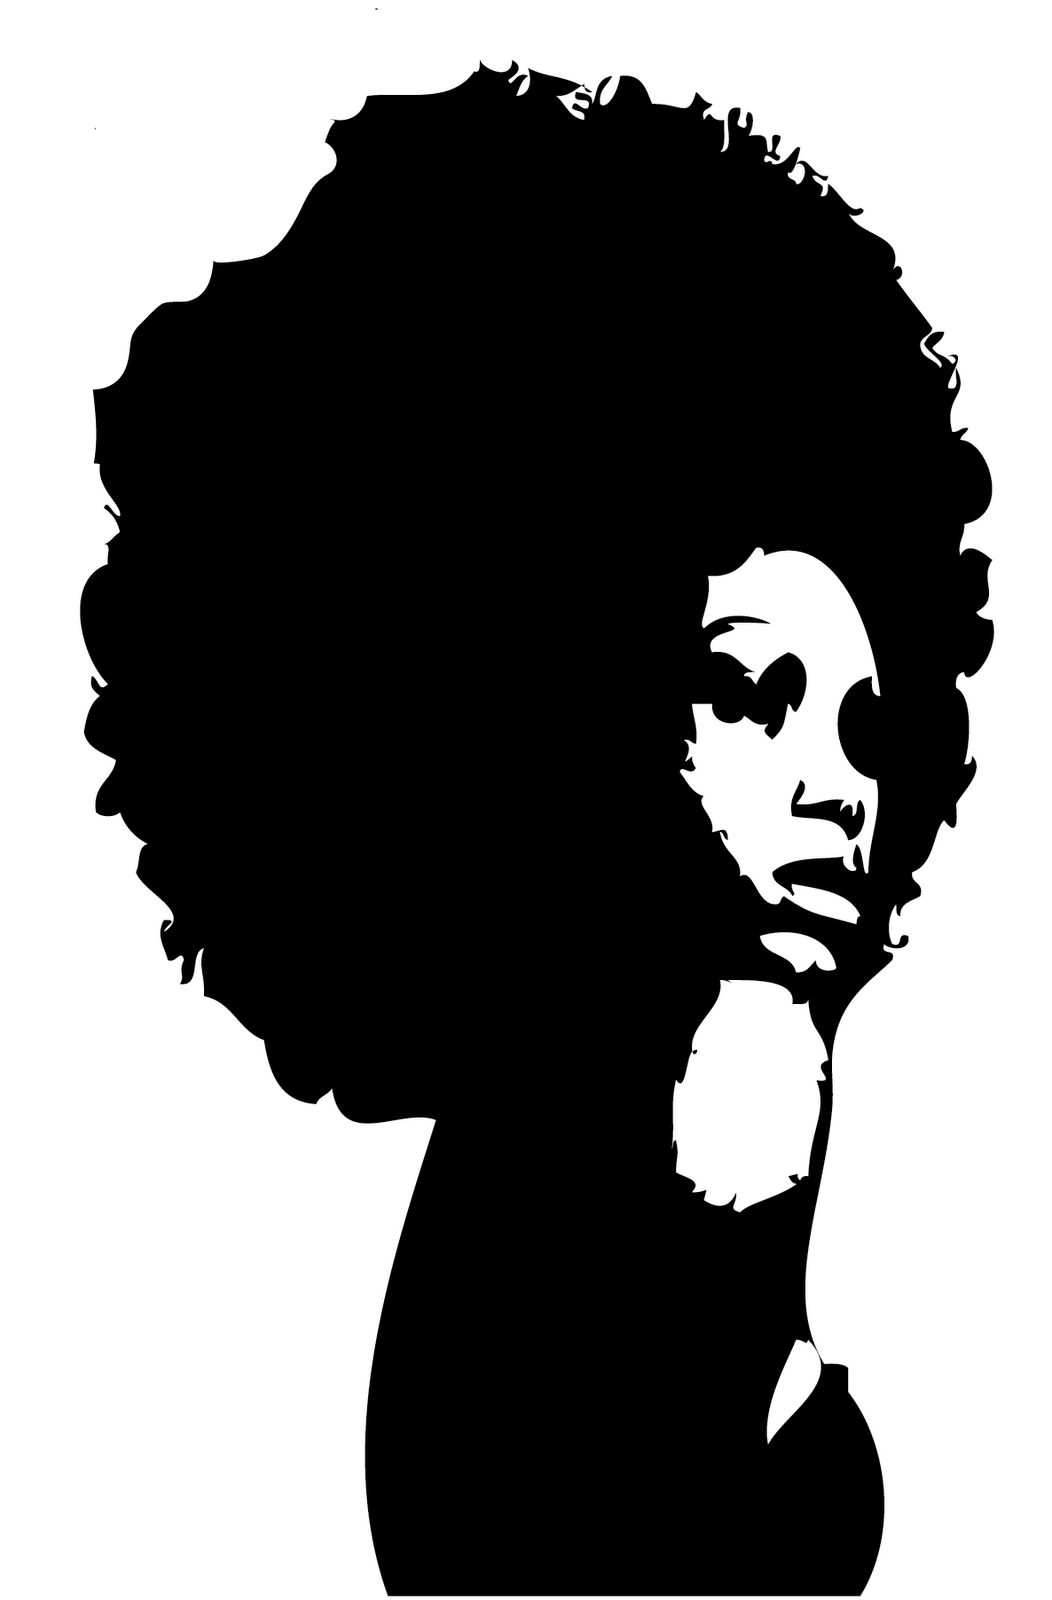 Black Woman  I Represent Me   Theory Republic